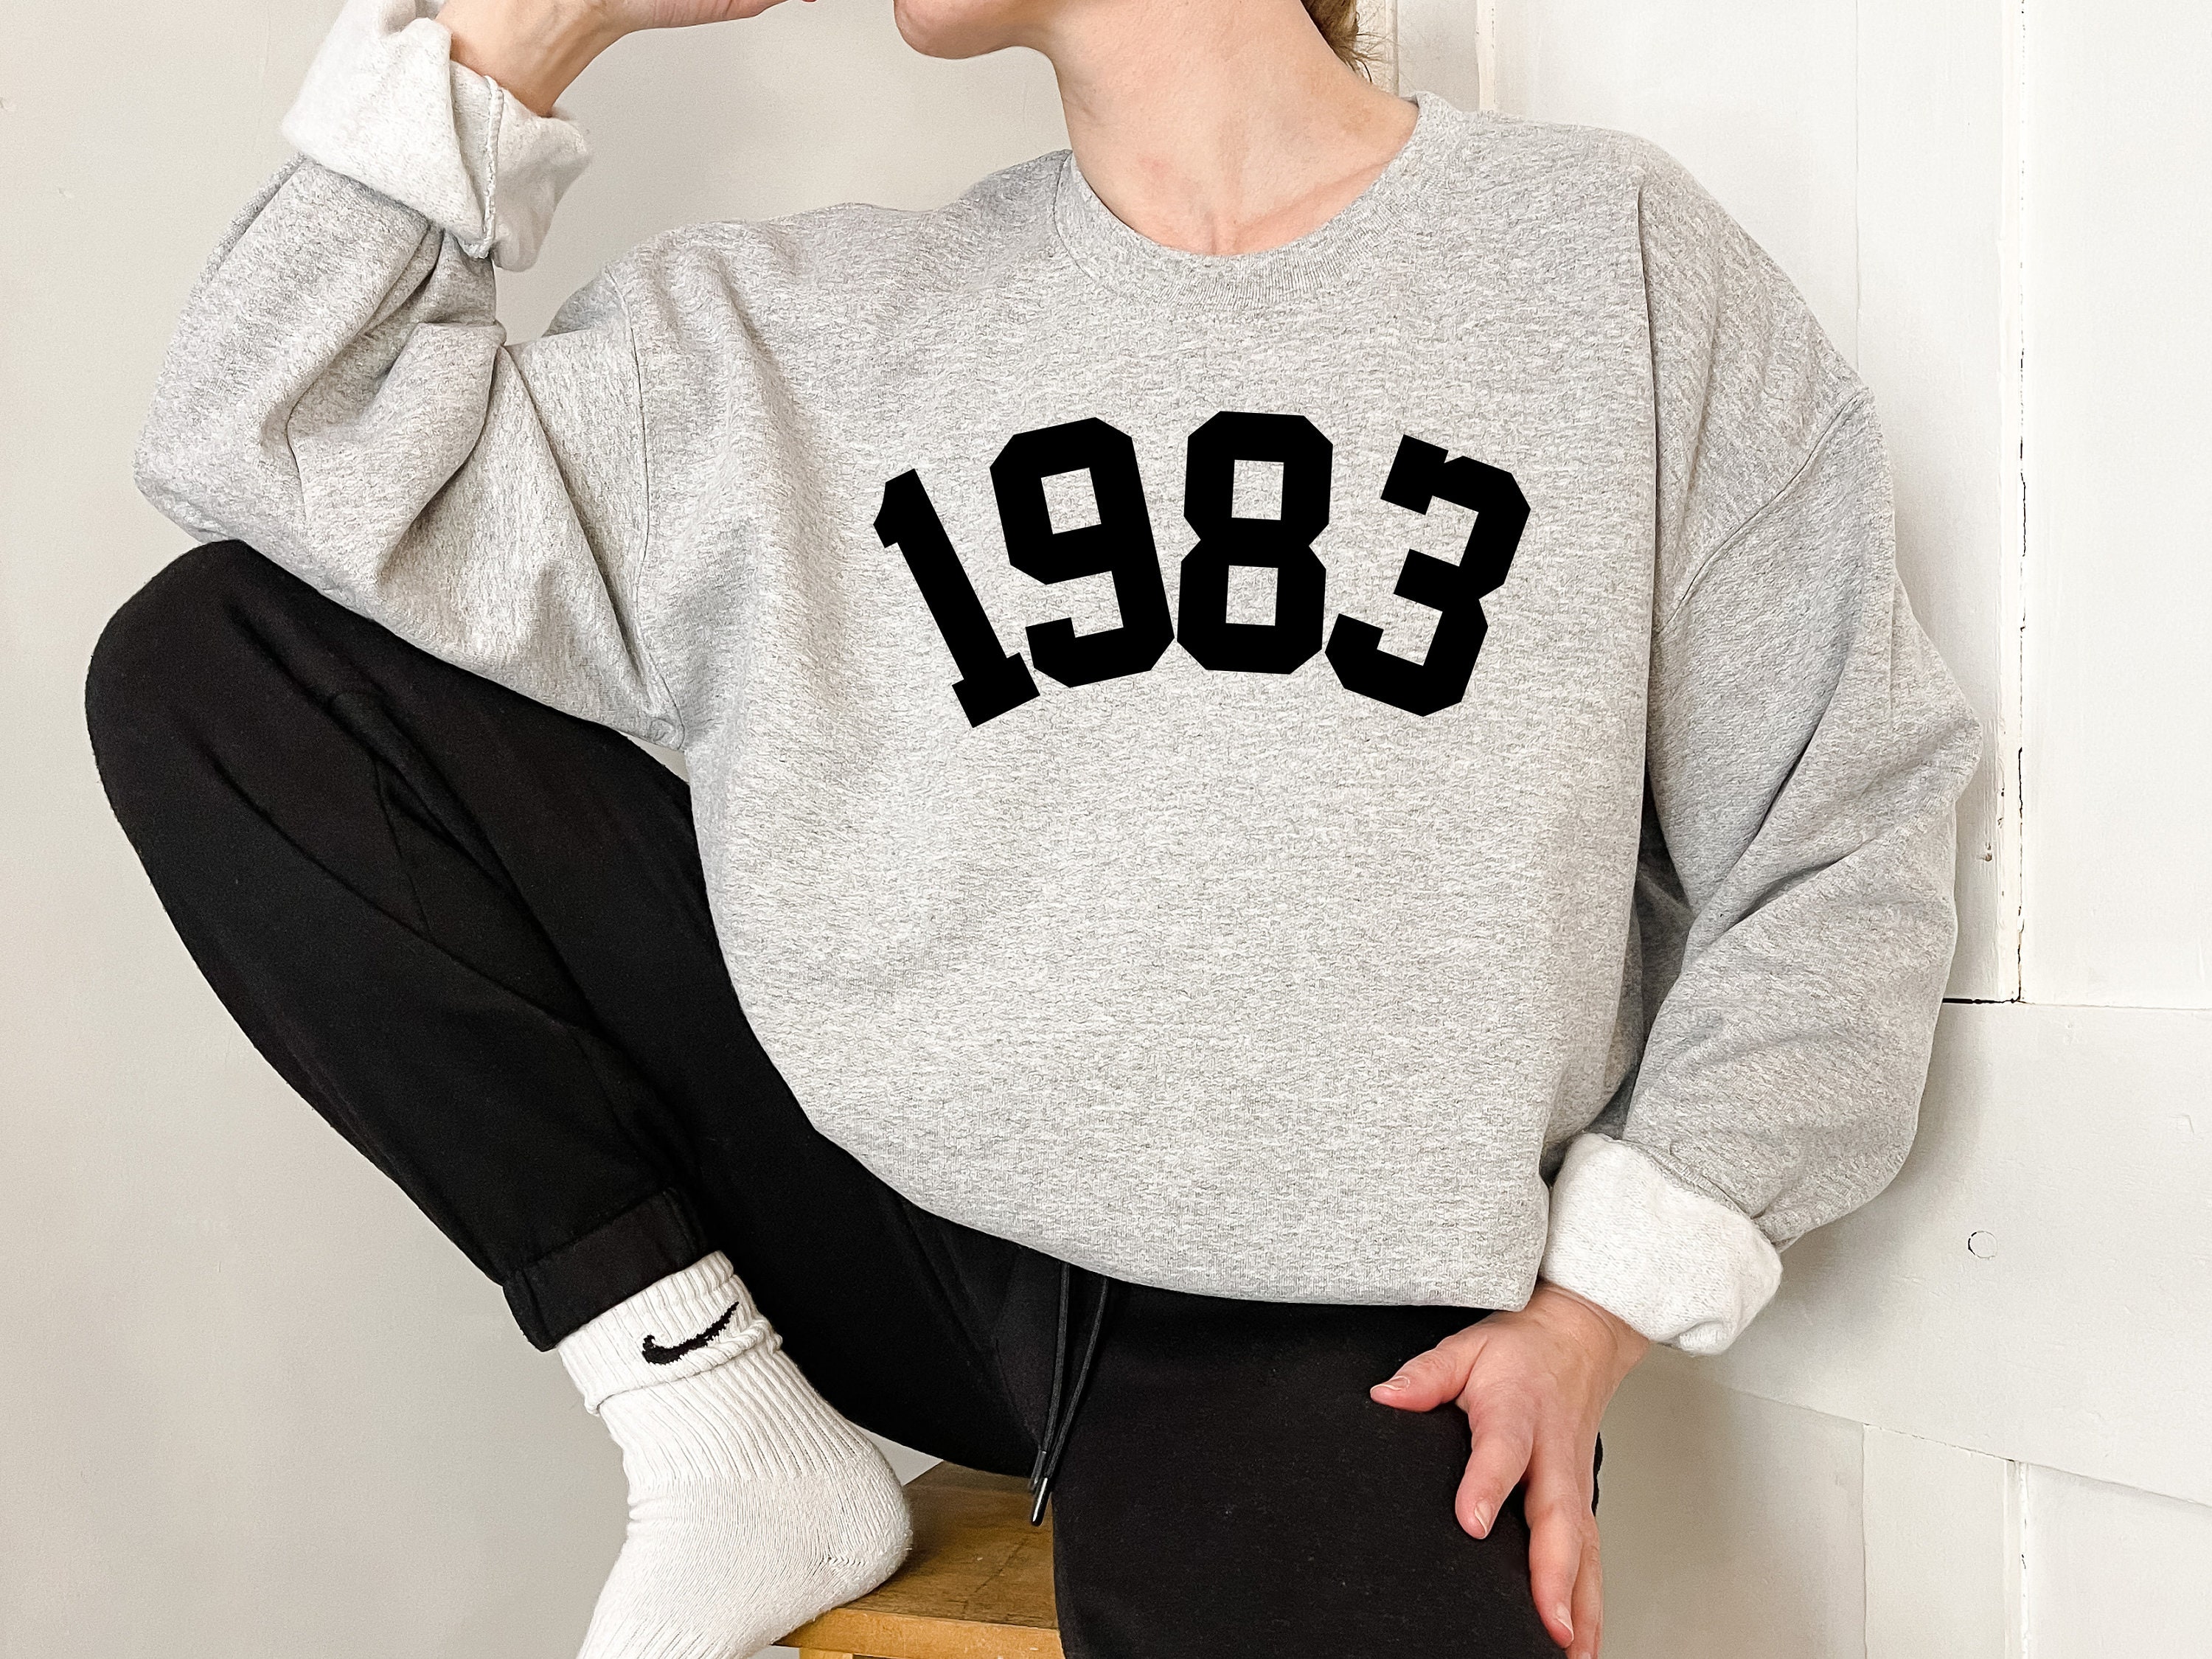 Discover 1983 Sweatshirt, 1983 Shirt, 40th Birthday Sweater, Black Logo, Sweatshirt